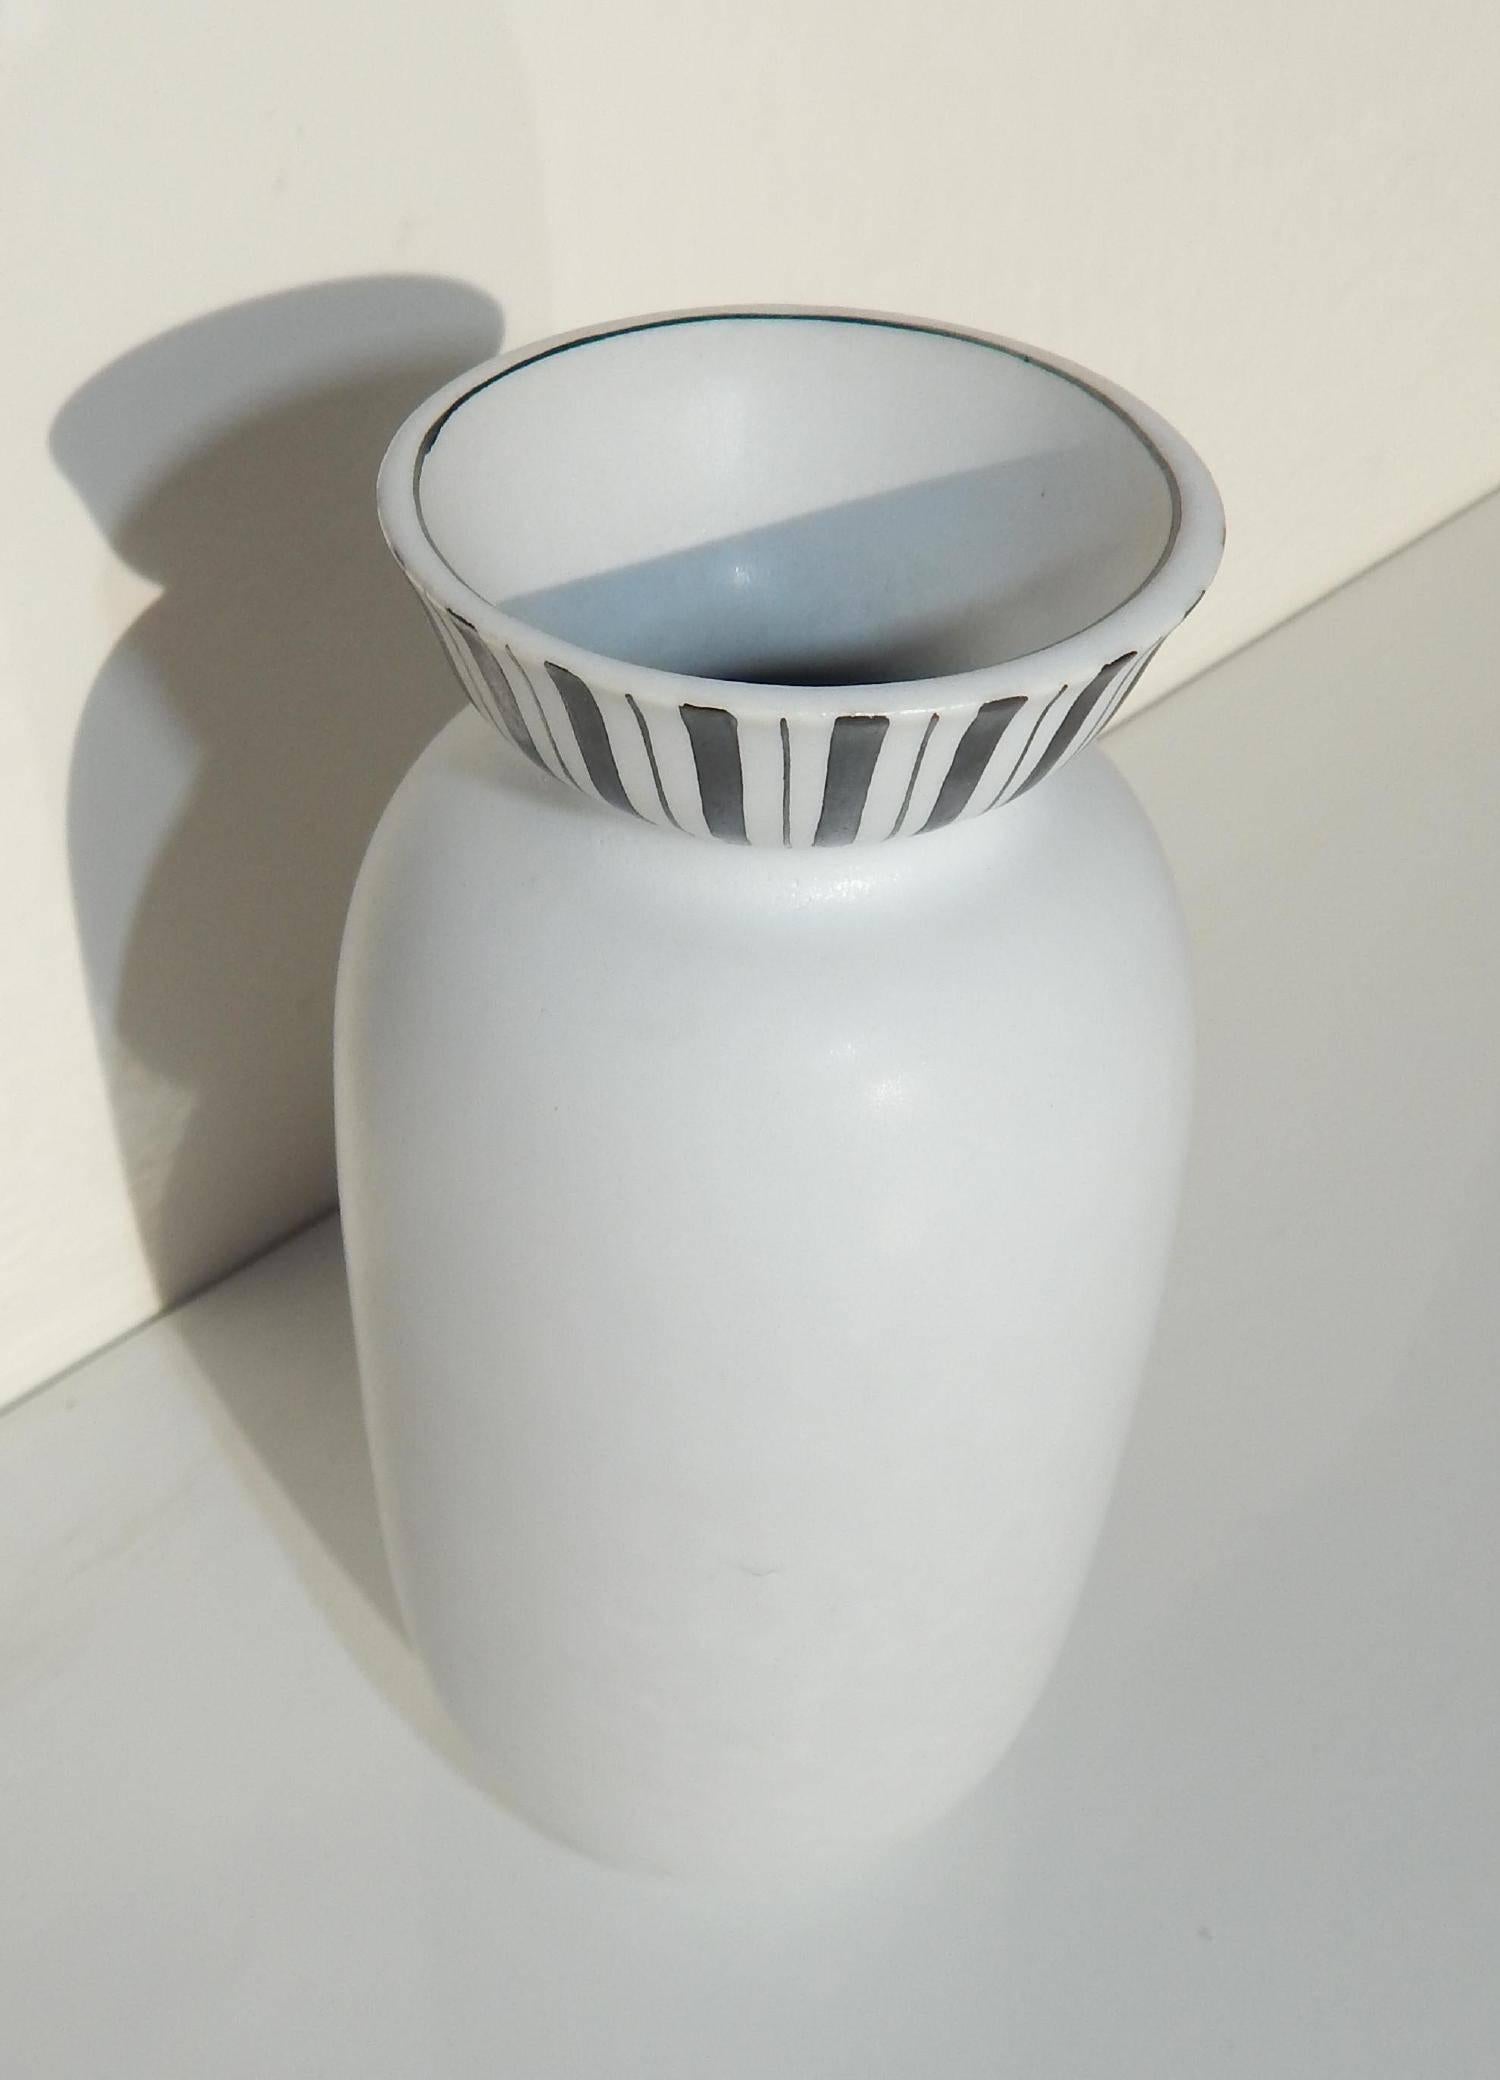 Swedish Gustavsberg Surreal Ceramic Vase with Silver Overlay by Stig Lindberg, Grazia